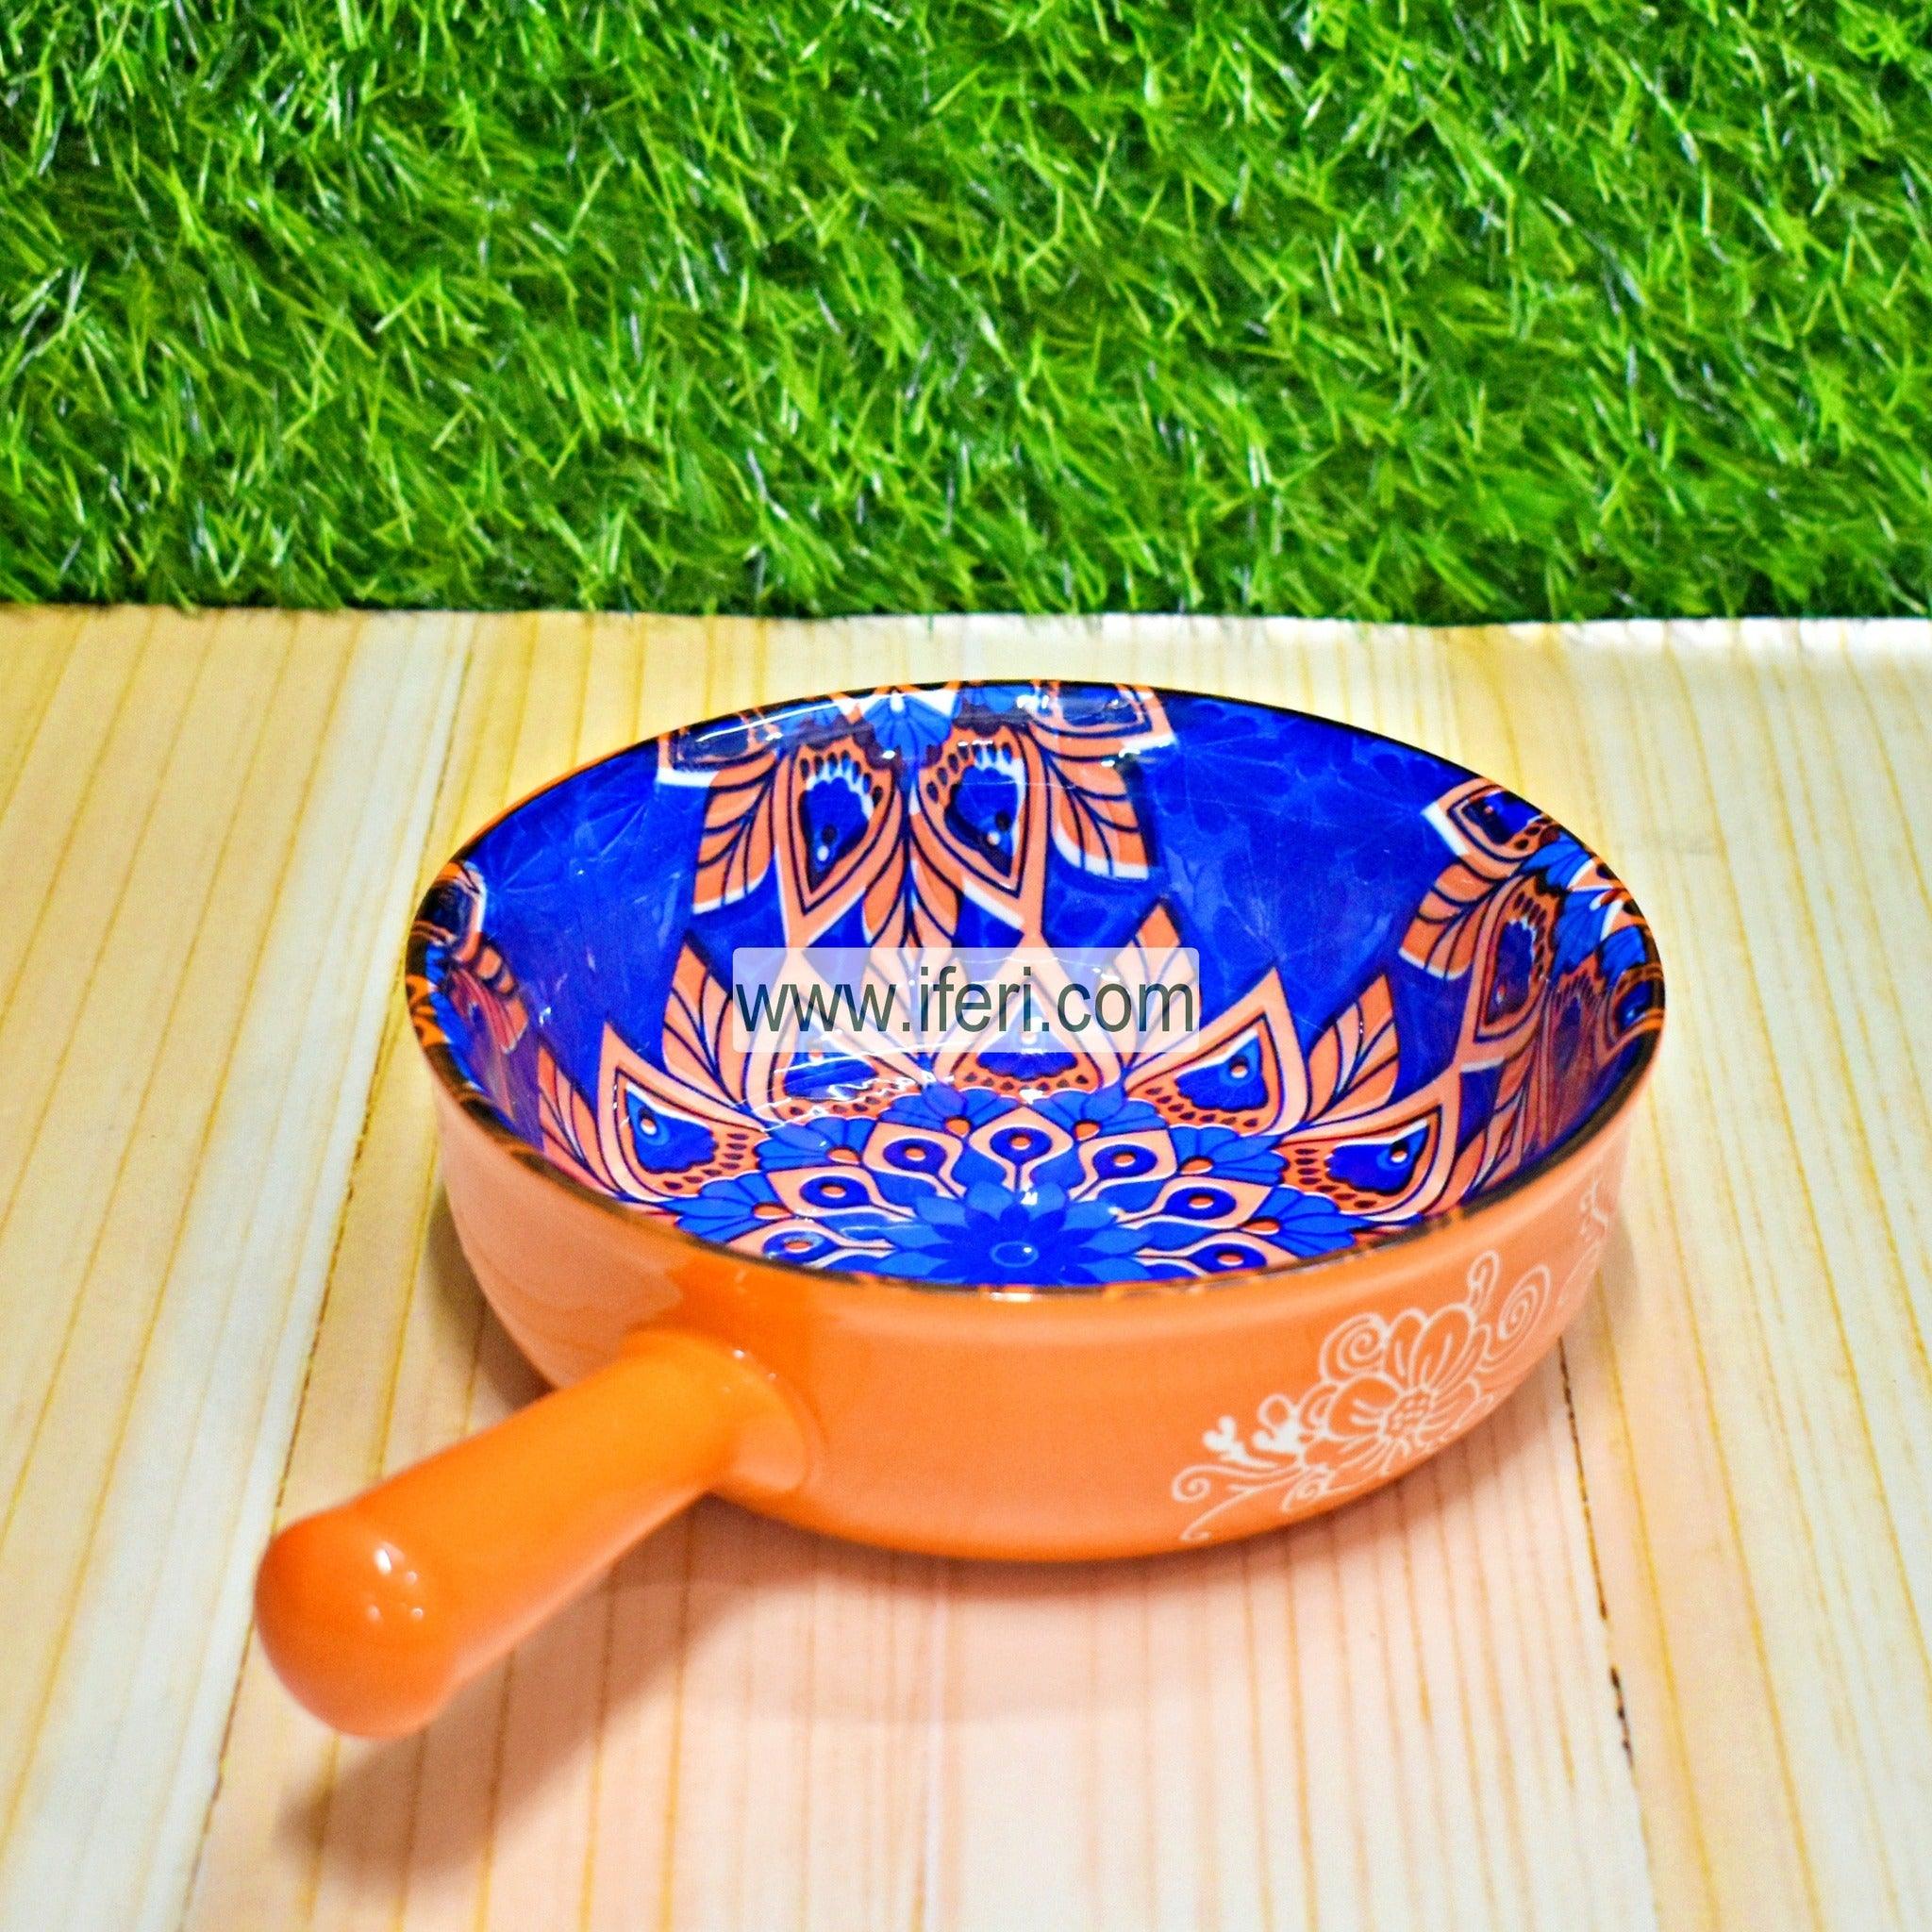 10 Inch Pan Shaped Ceramic Serving Dish SY0086 Price in Bangladesh - iferi.com